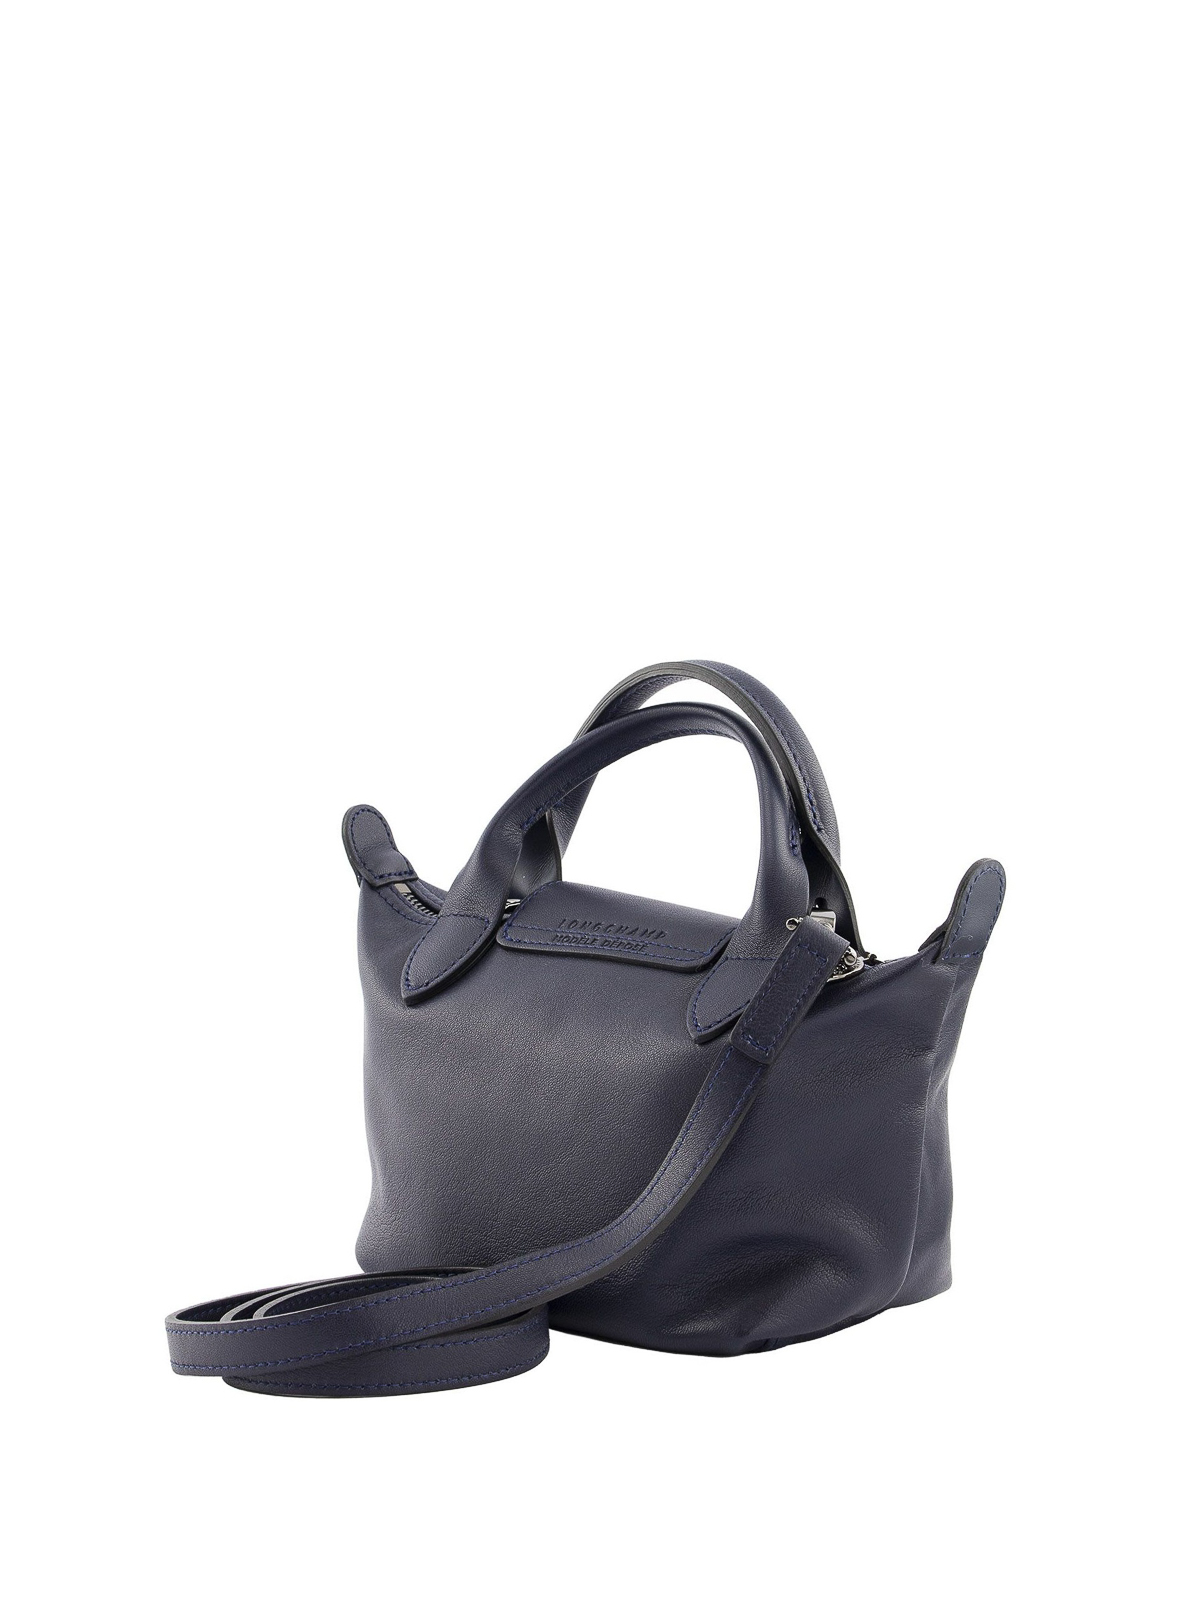 Cross body bags Longchamp - Le Pliage Cuir handbag - 1500757556